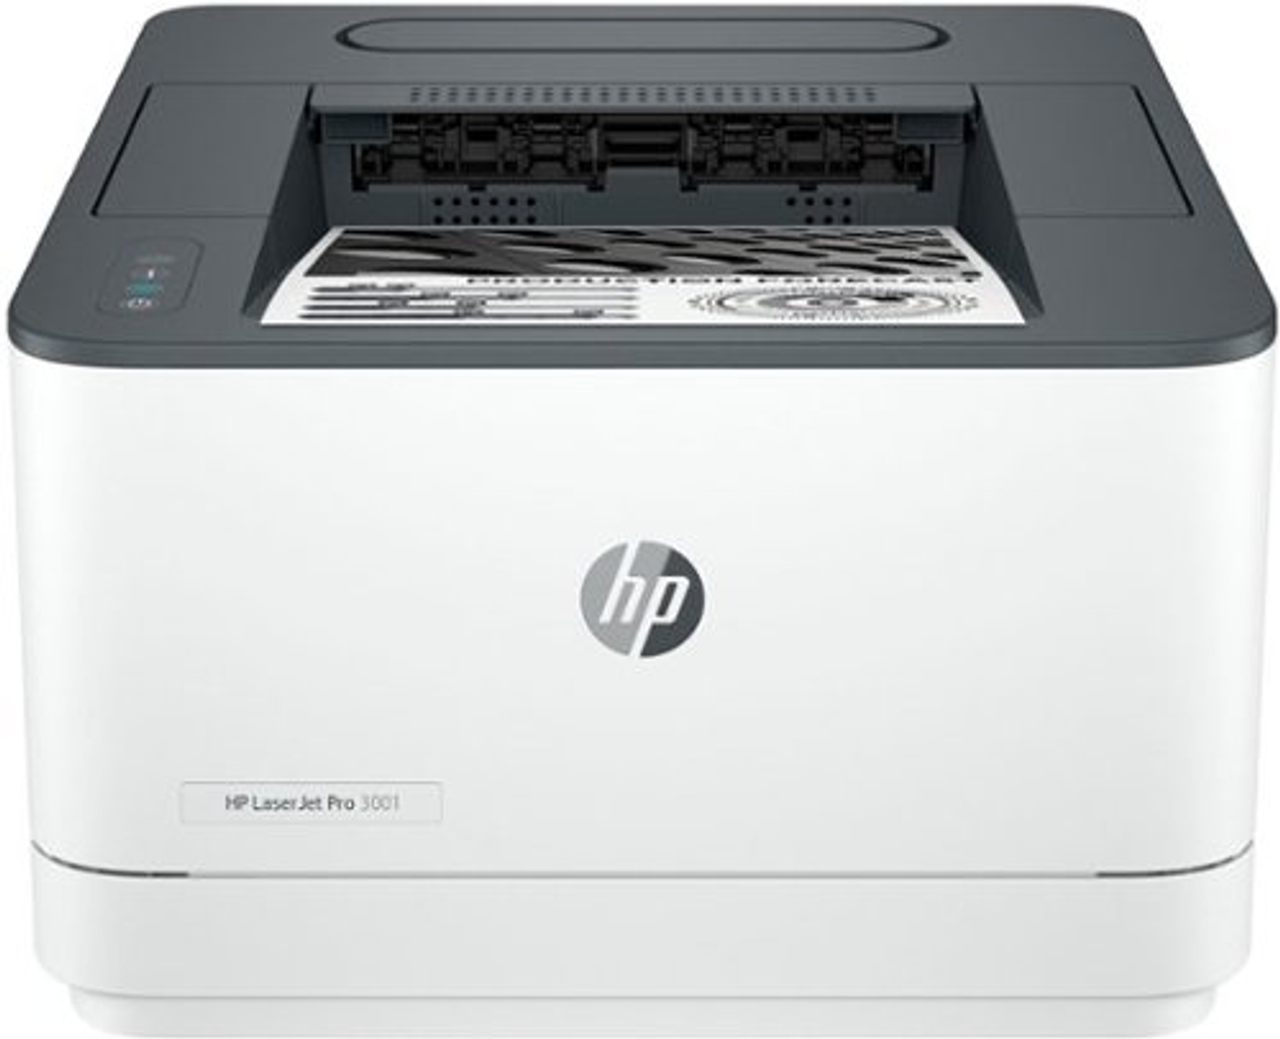 HP - LaserJet Pro 3001dw Wireless Black-and-White Laser Printer